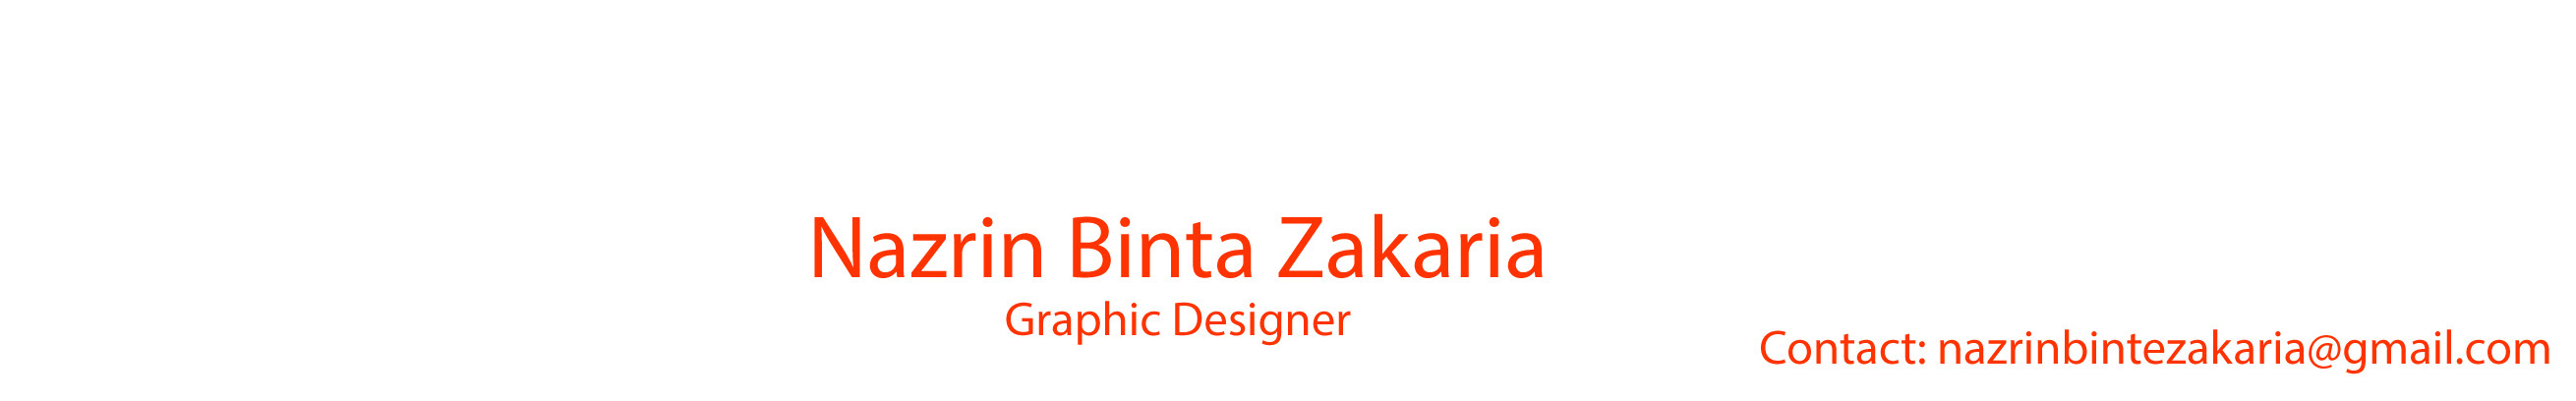 Nazrin Binta Zakaria's profile banner